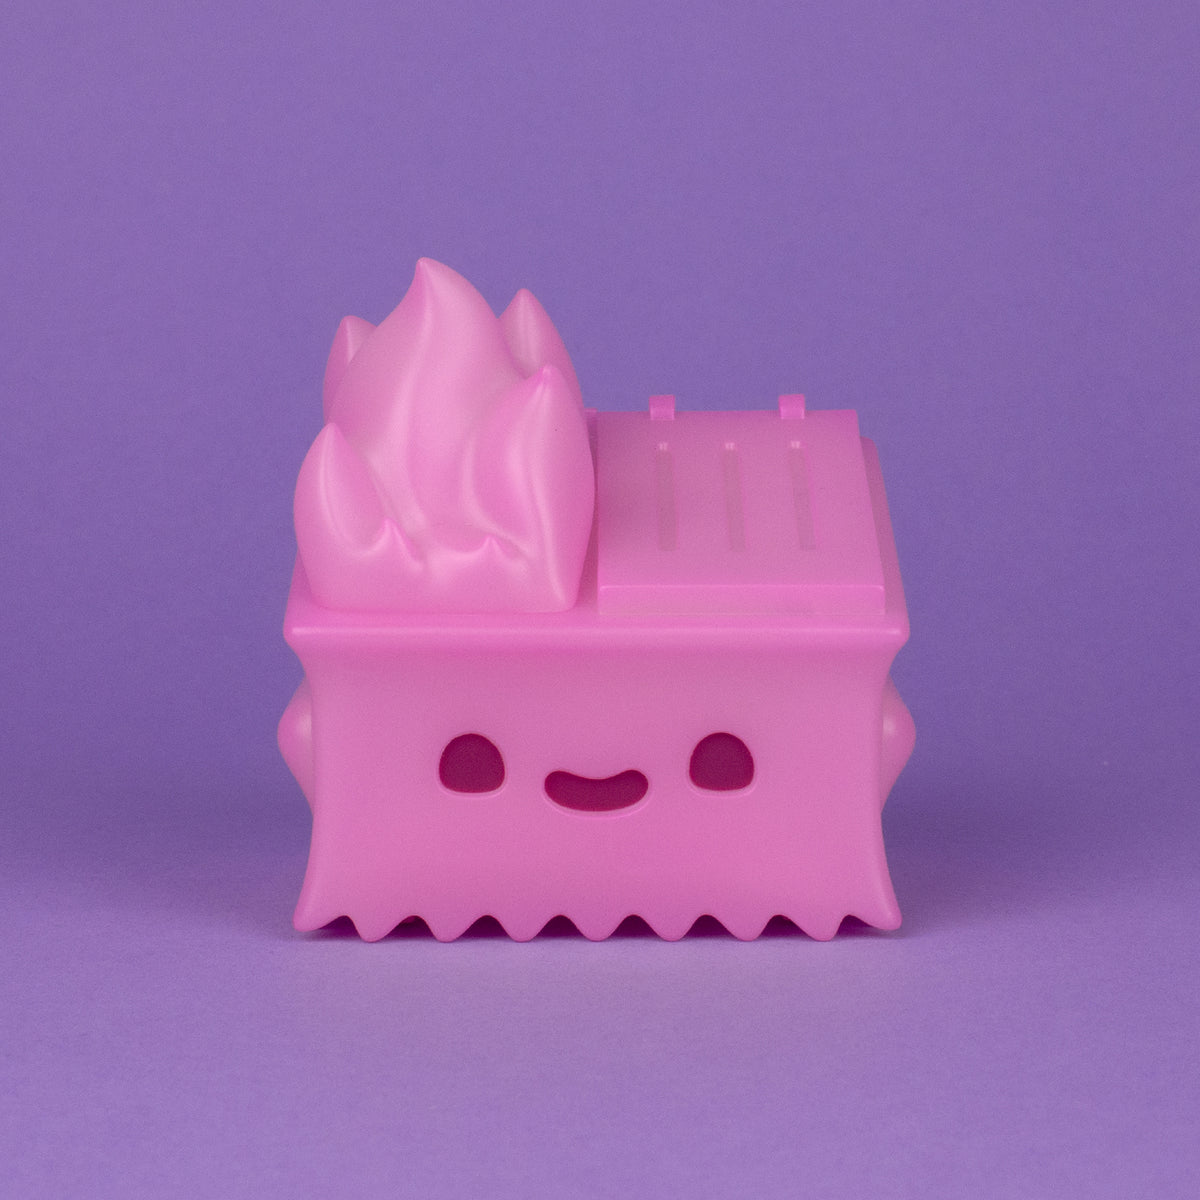 Dumpster Ghost Fire Vinyl Figure - Pink Glow in the Dark